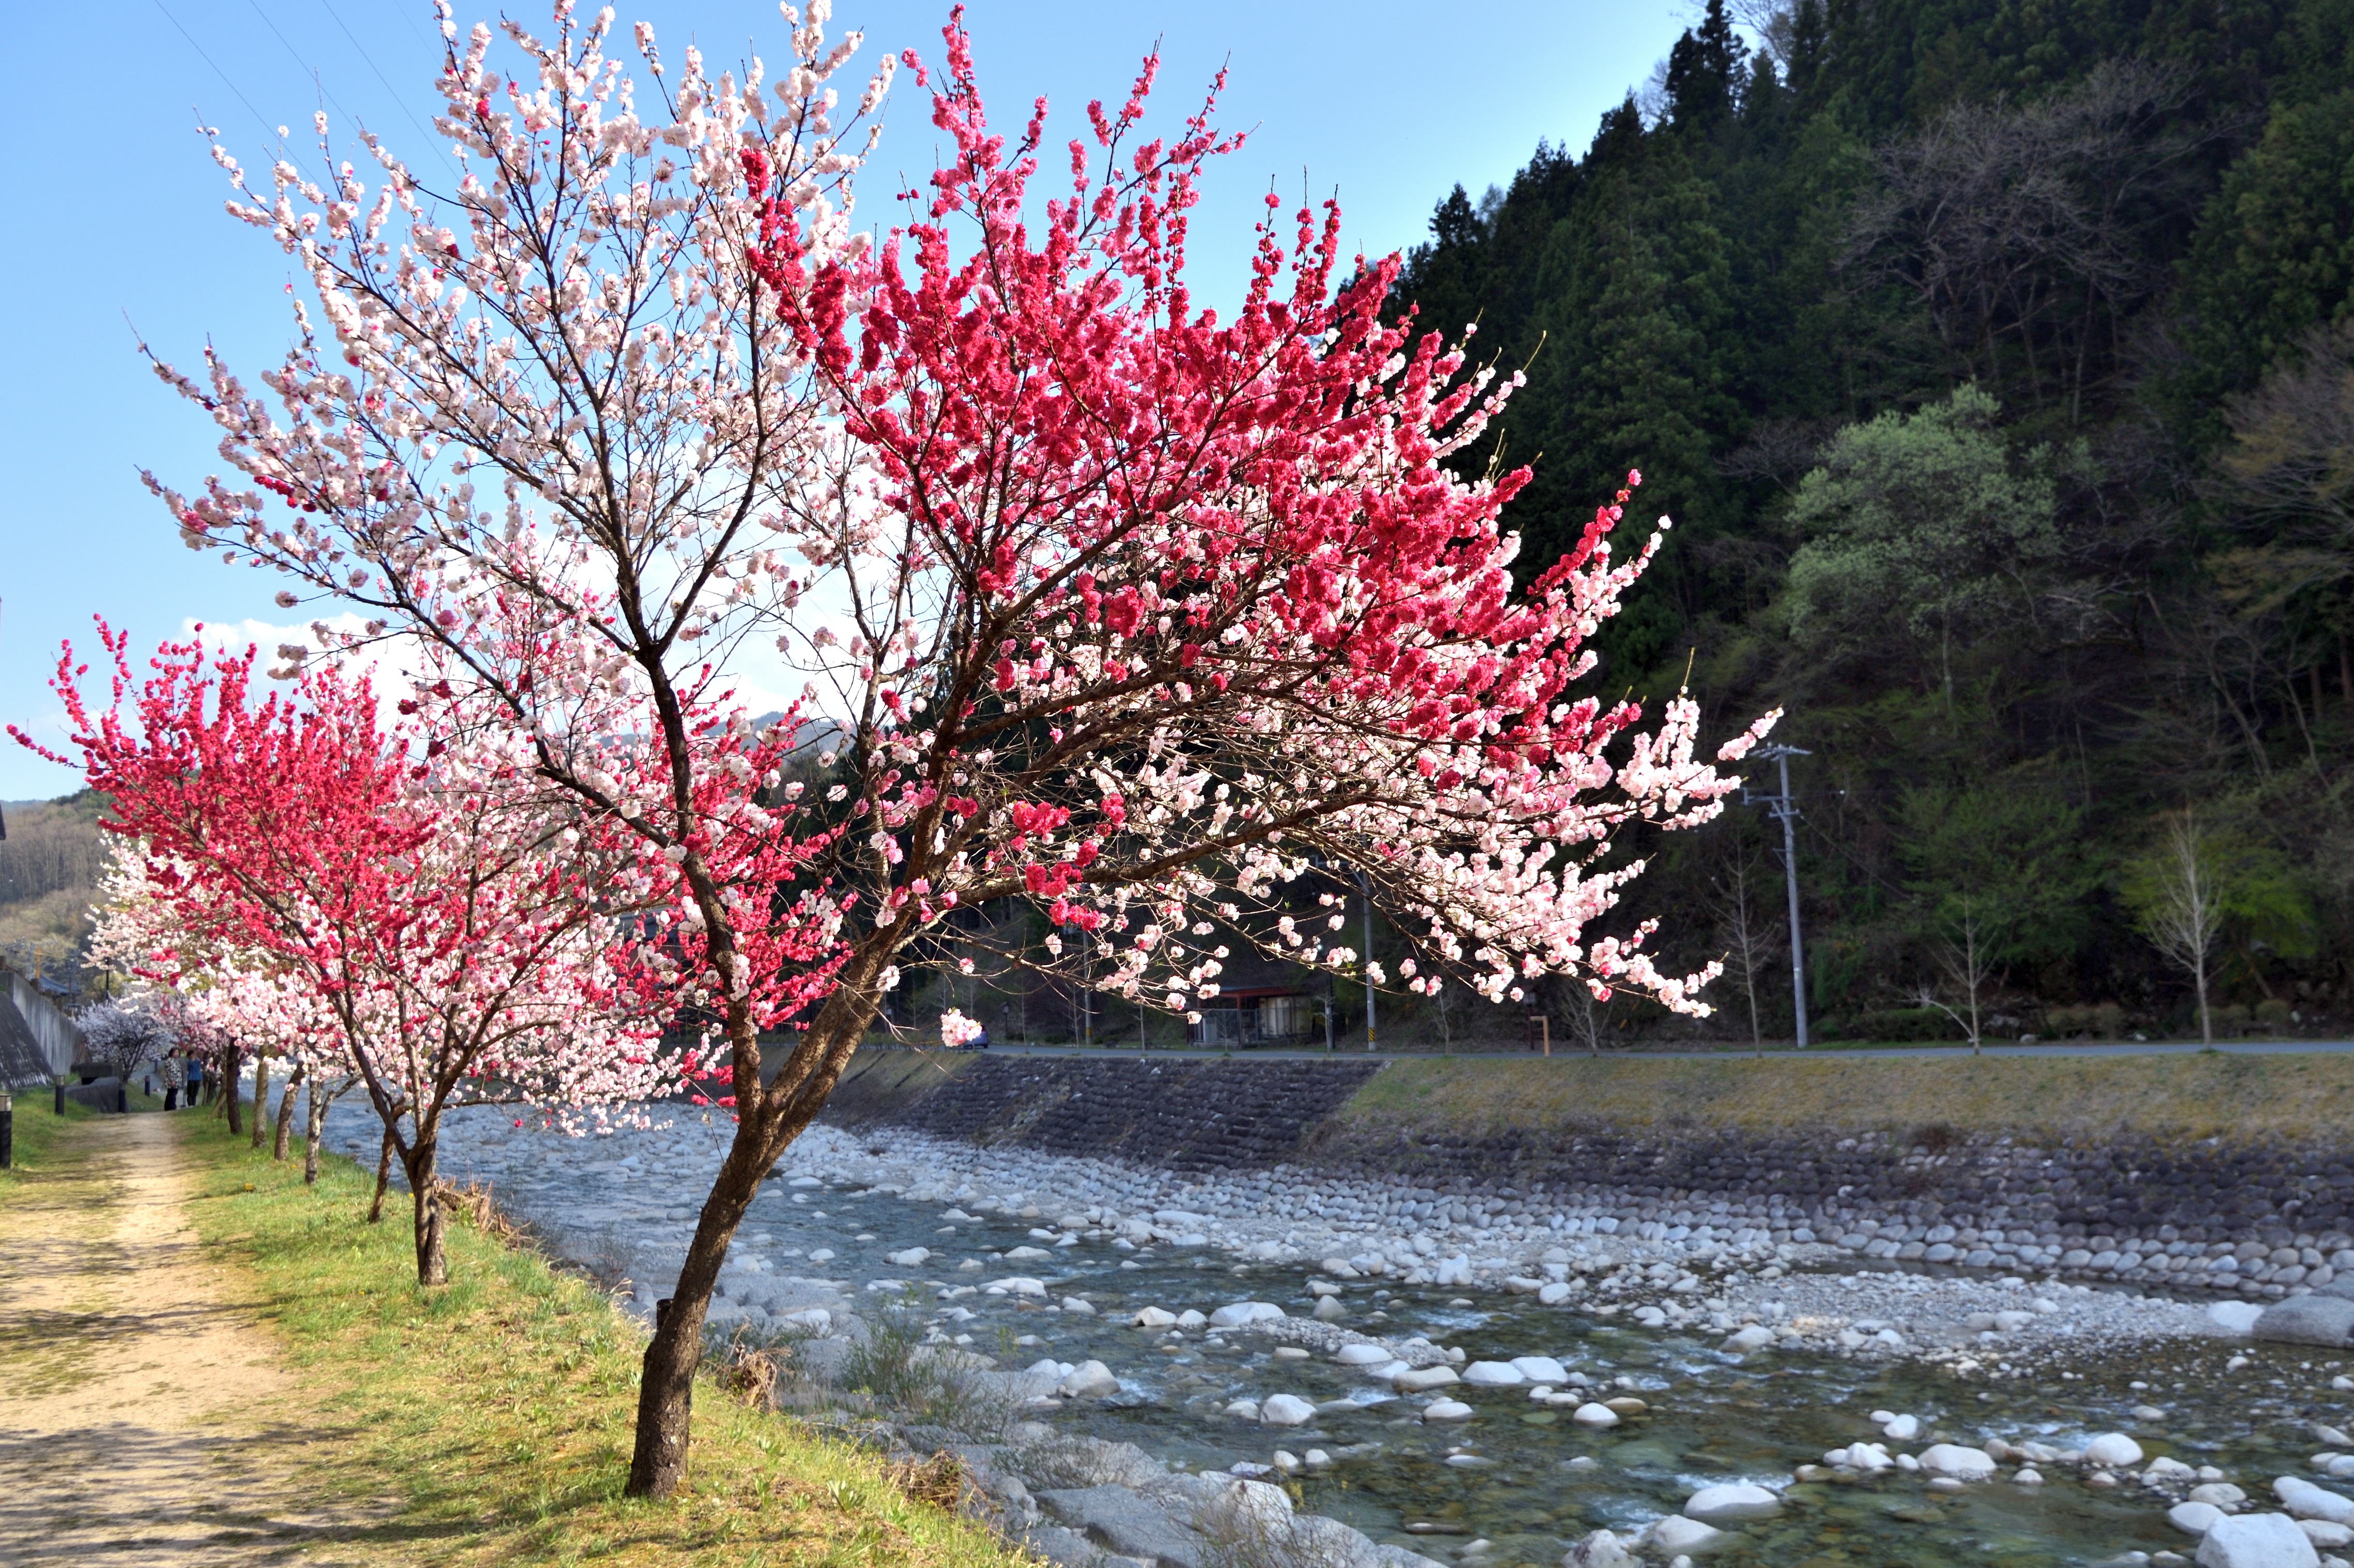 Achi river and Hanamomo (Peach flowers) in Hirugami hot spring